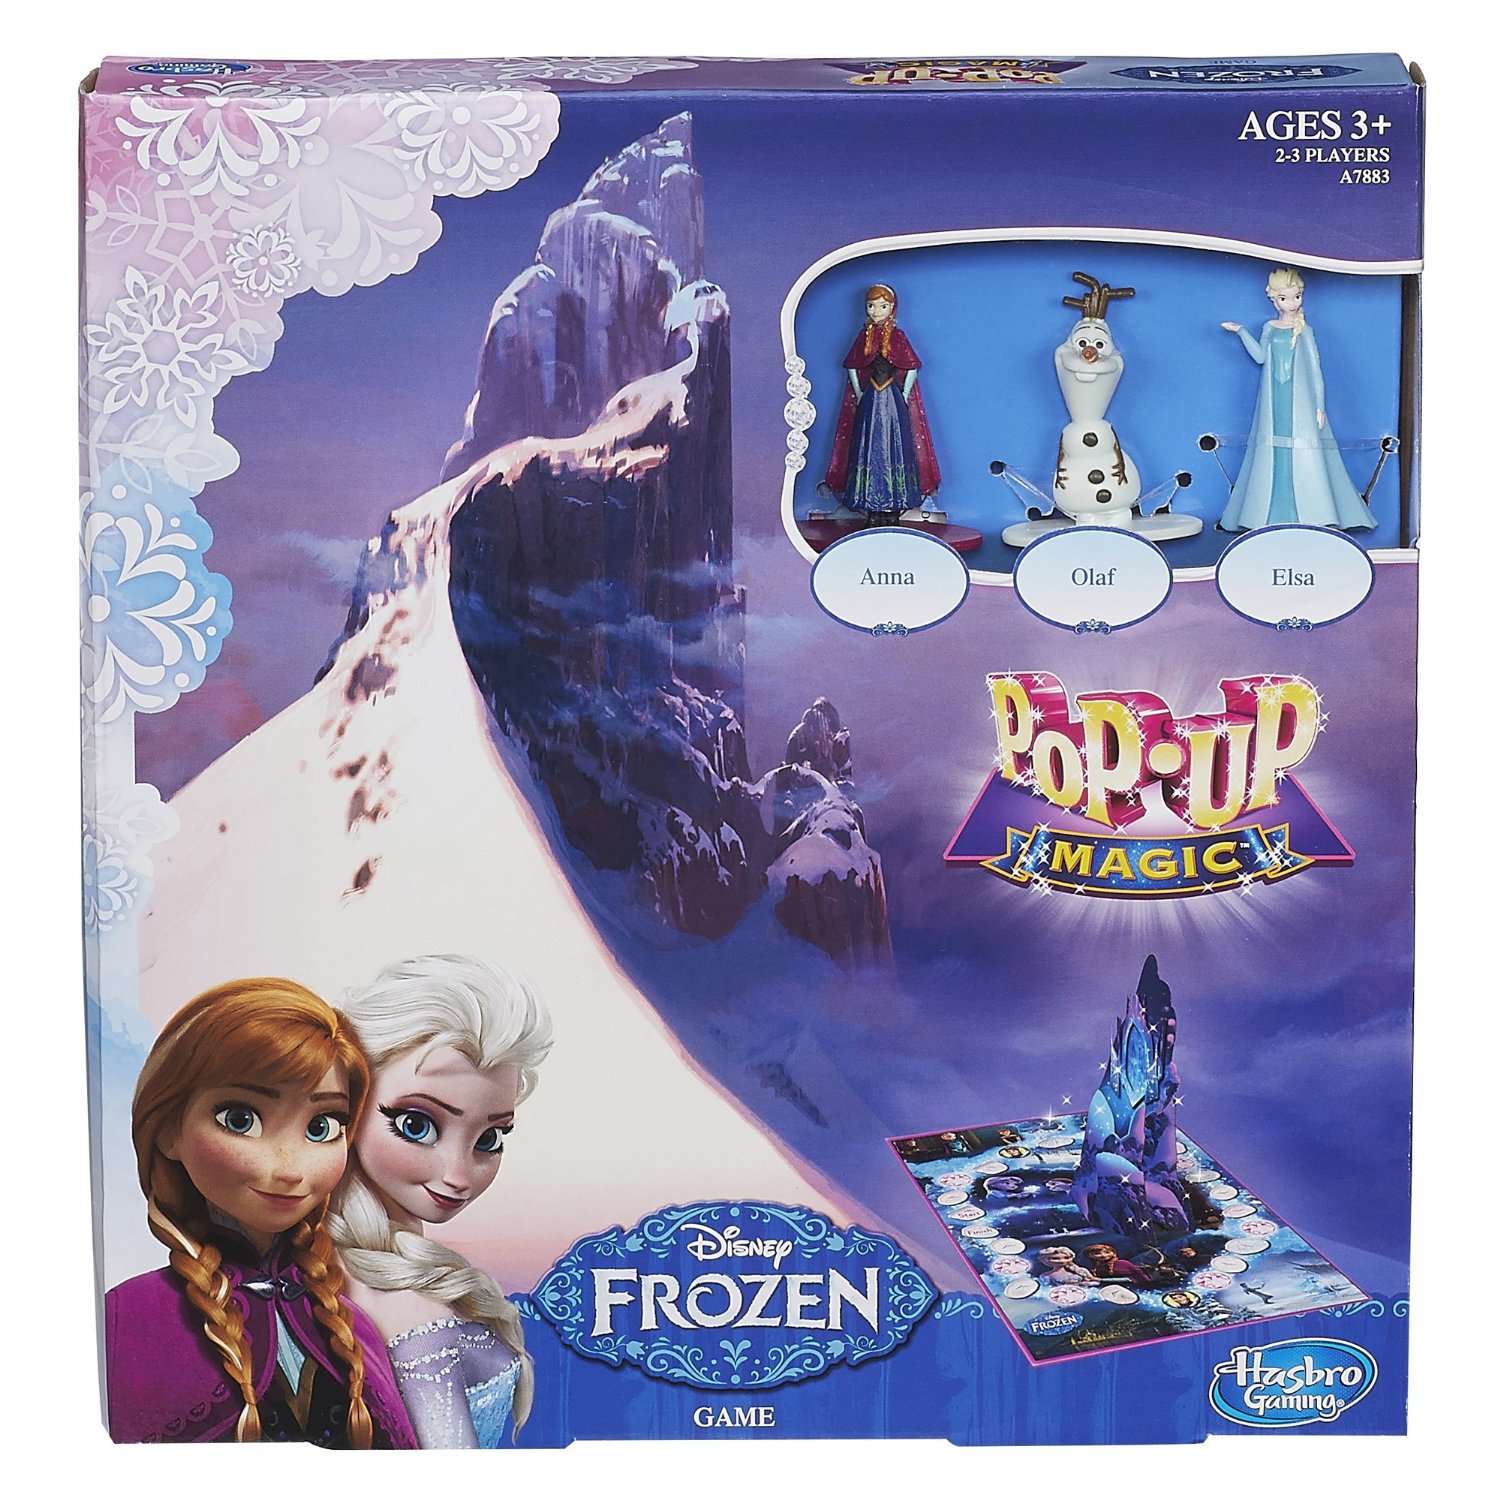 FROZEN Disney Pop-Up Magic Frozen Game